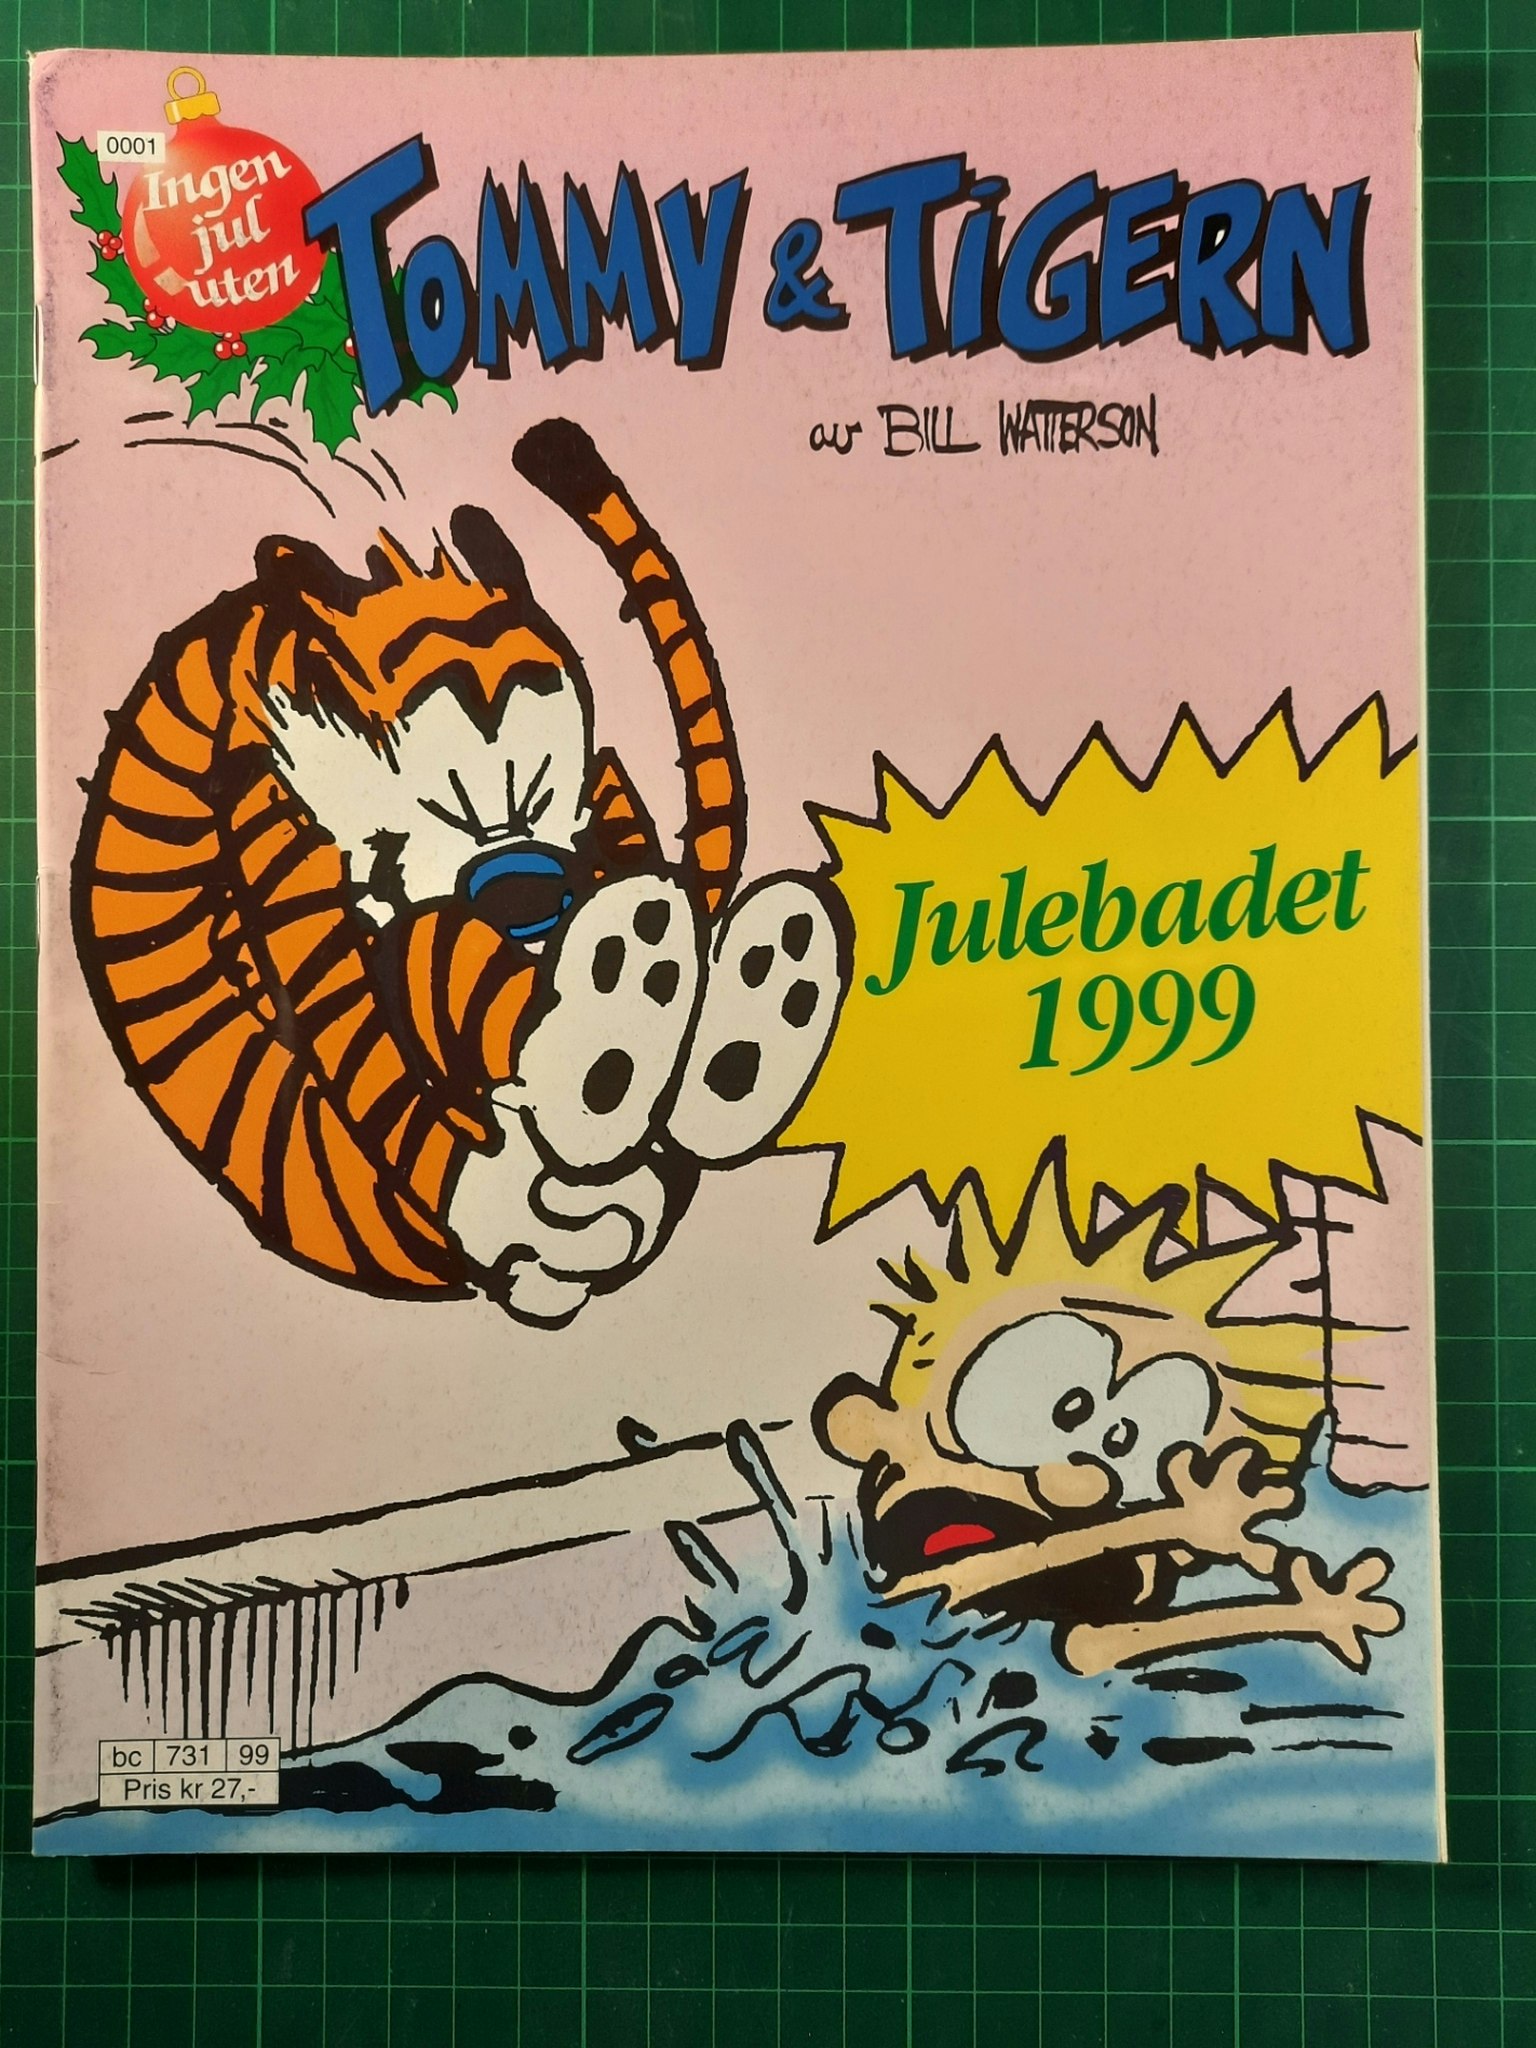 Tommy & Tigern julen 1999